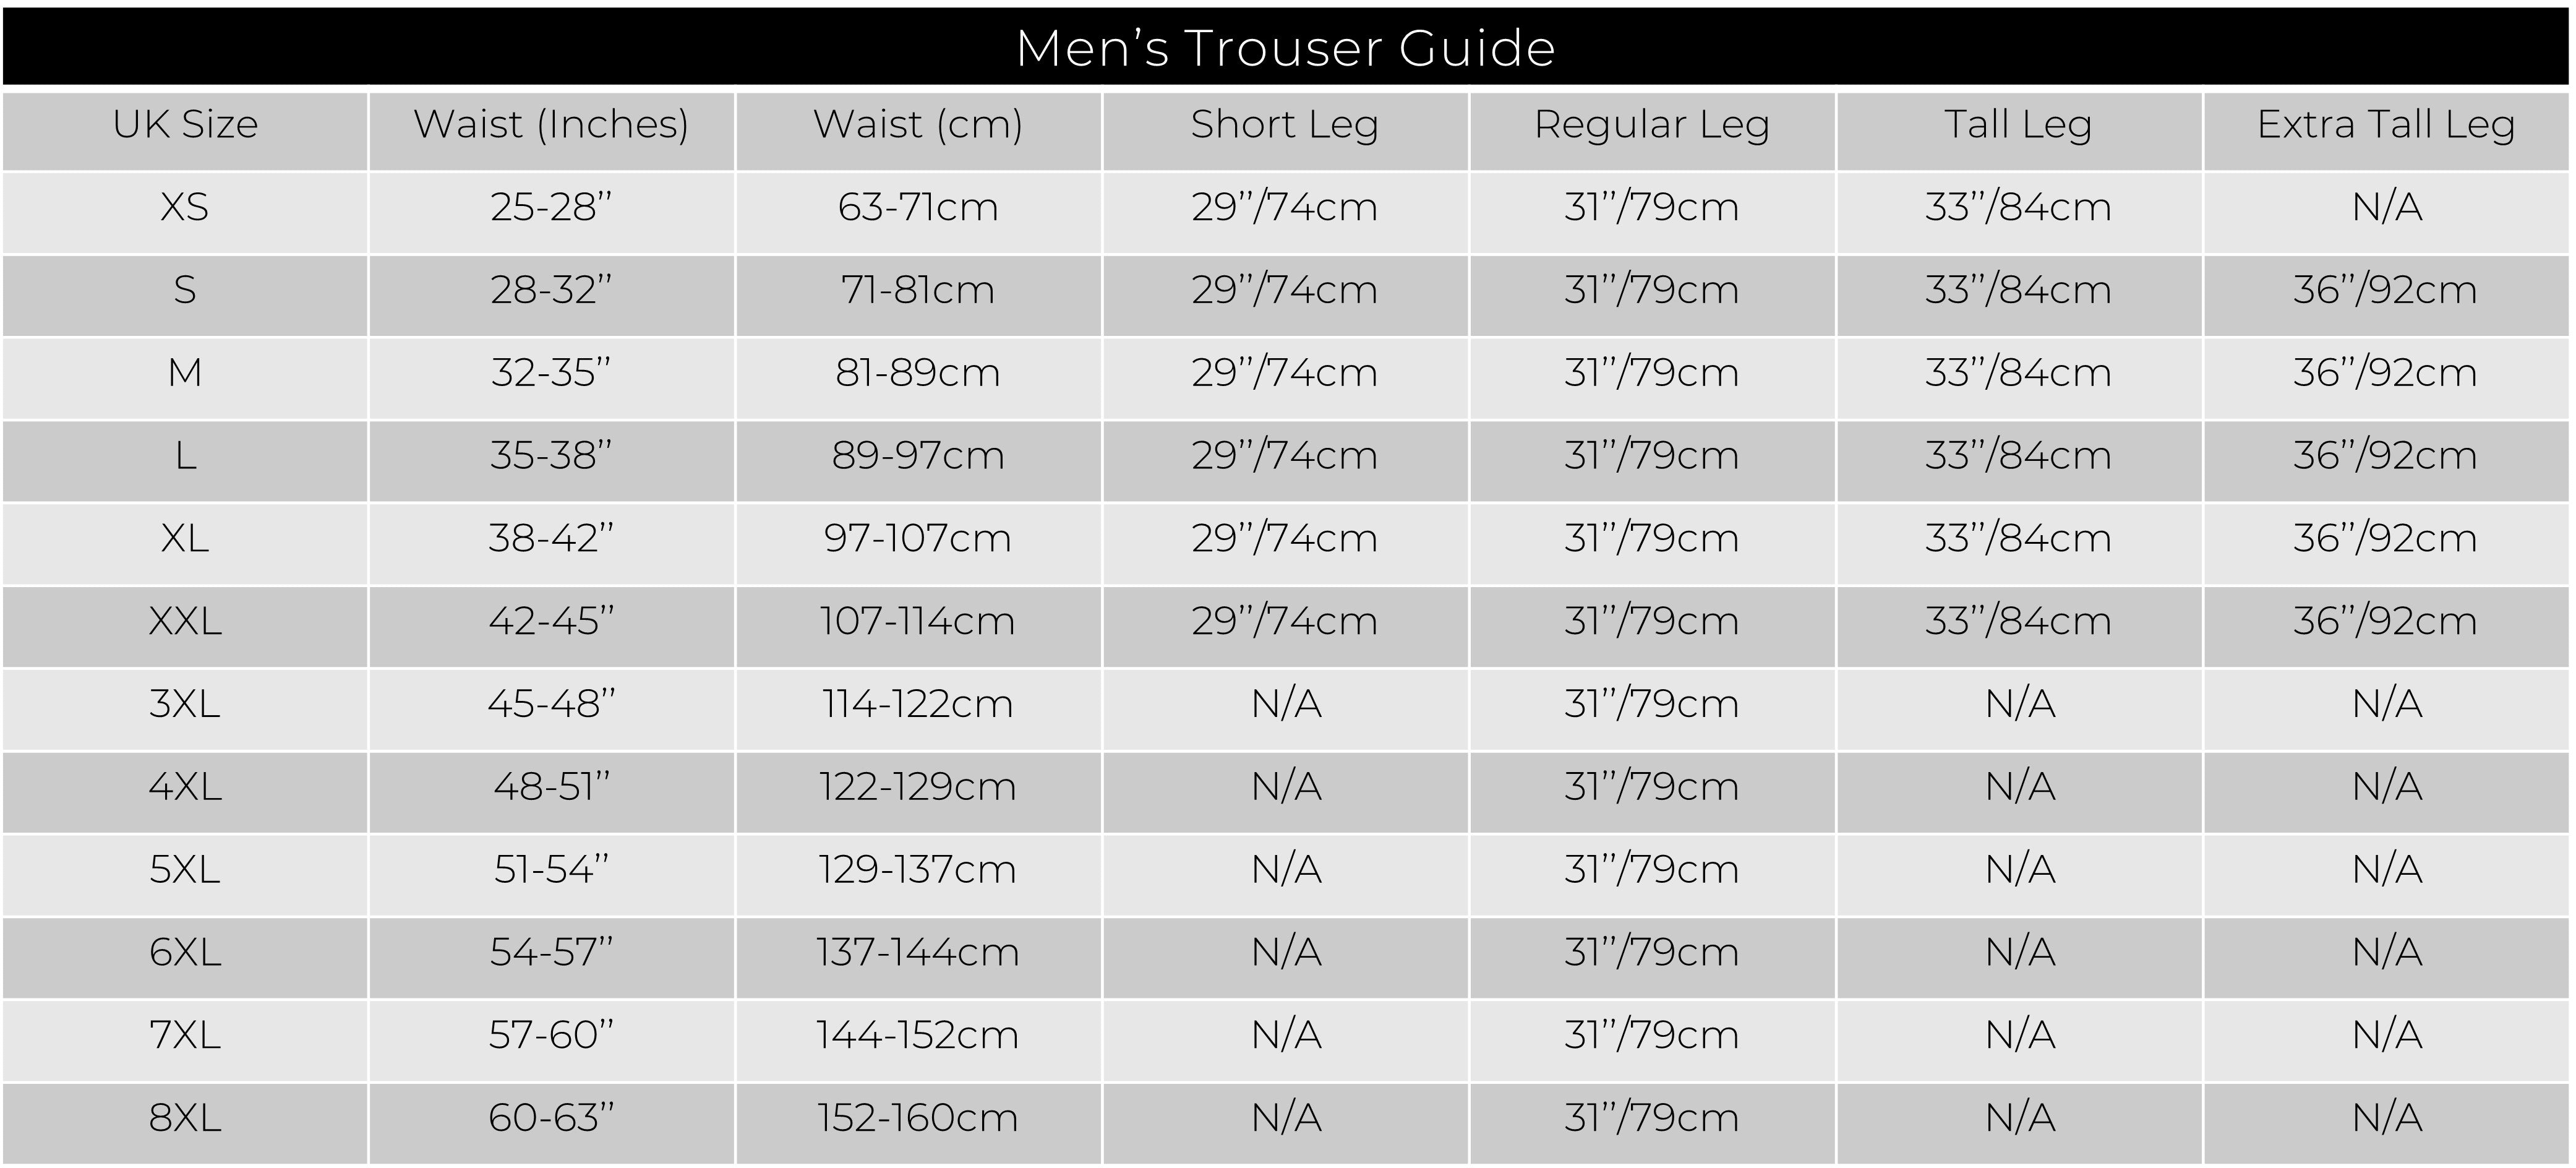 Measurement of a men's pant or trouser | Basic Pant Measurement Procedure -  YouTube